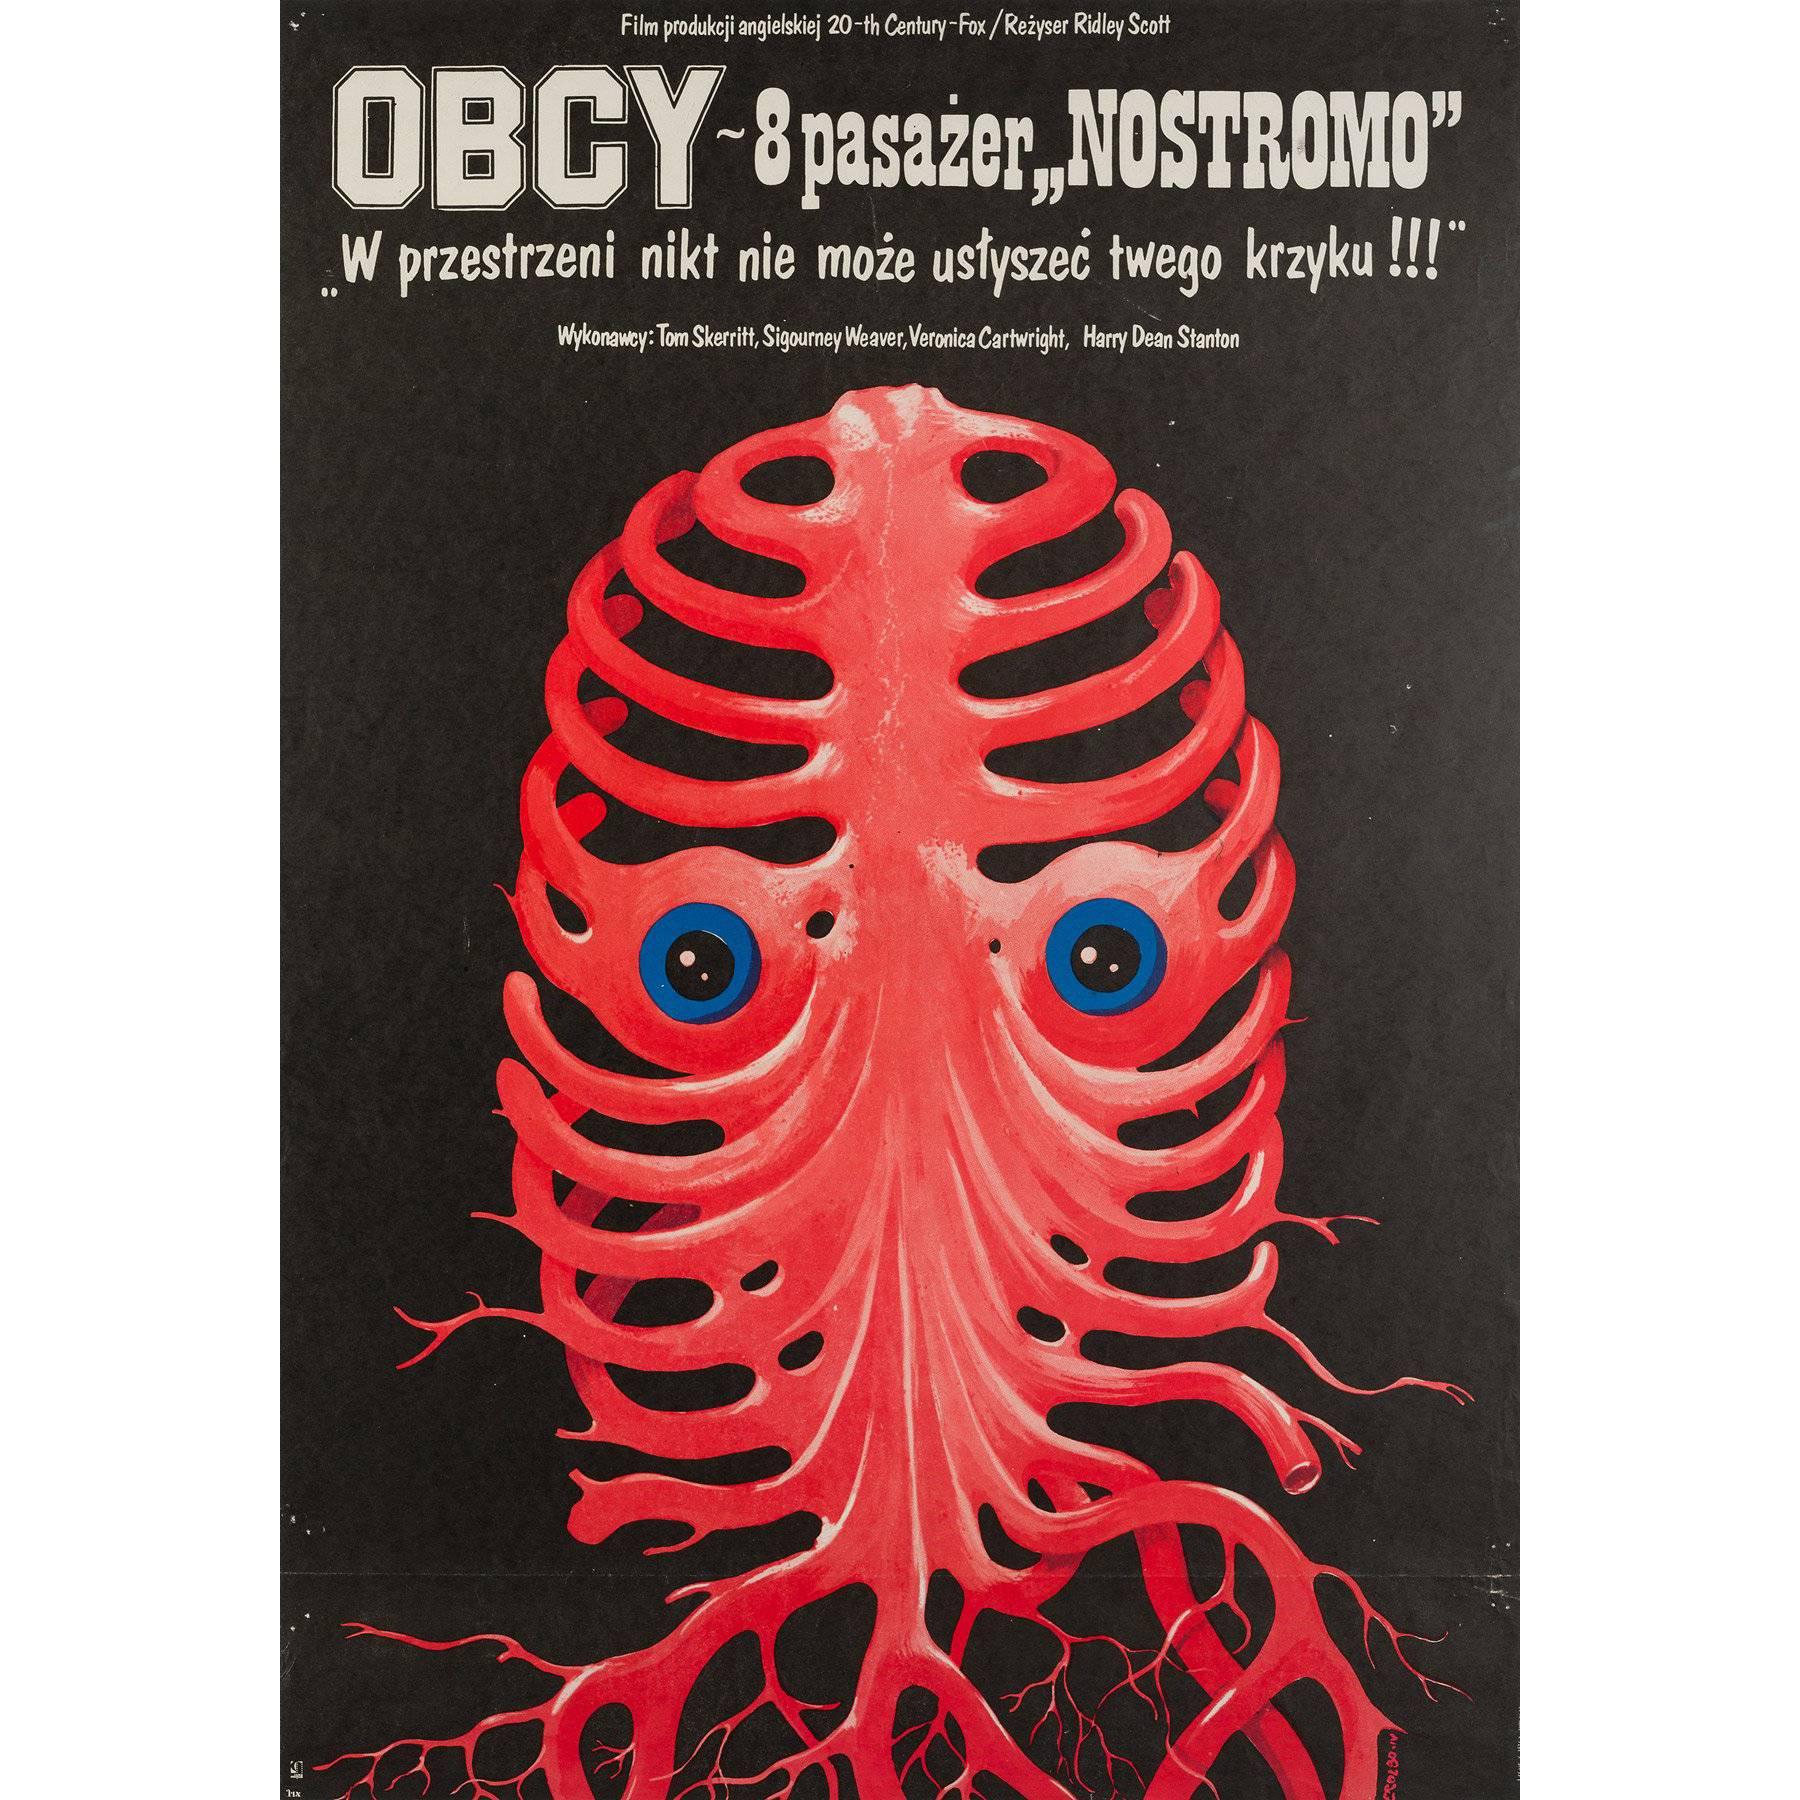 Alien Polish Film Poster, Jakub Erol, 1980